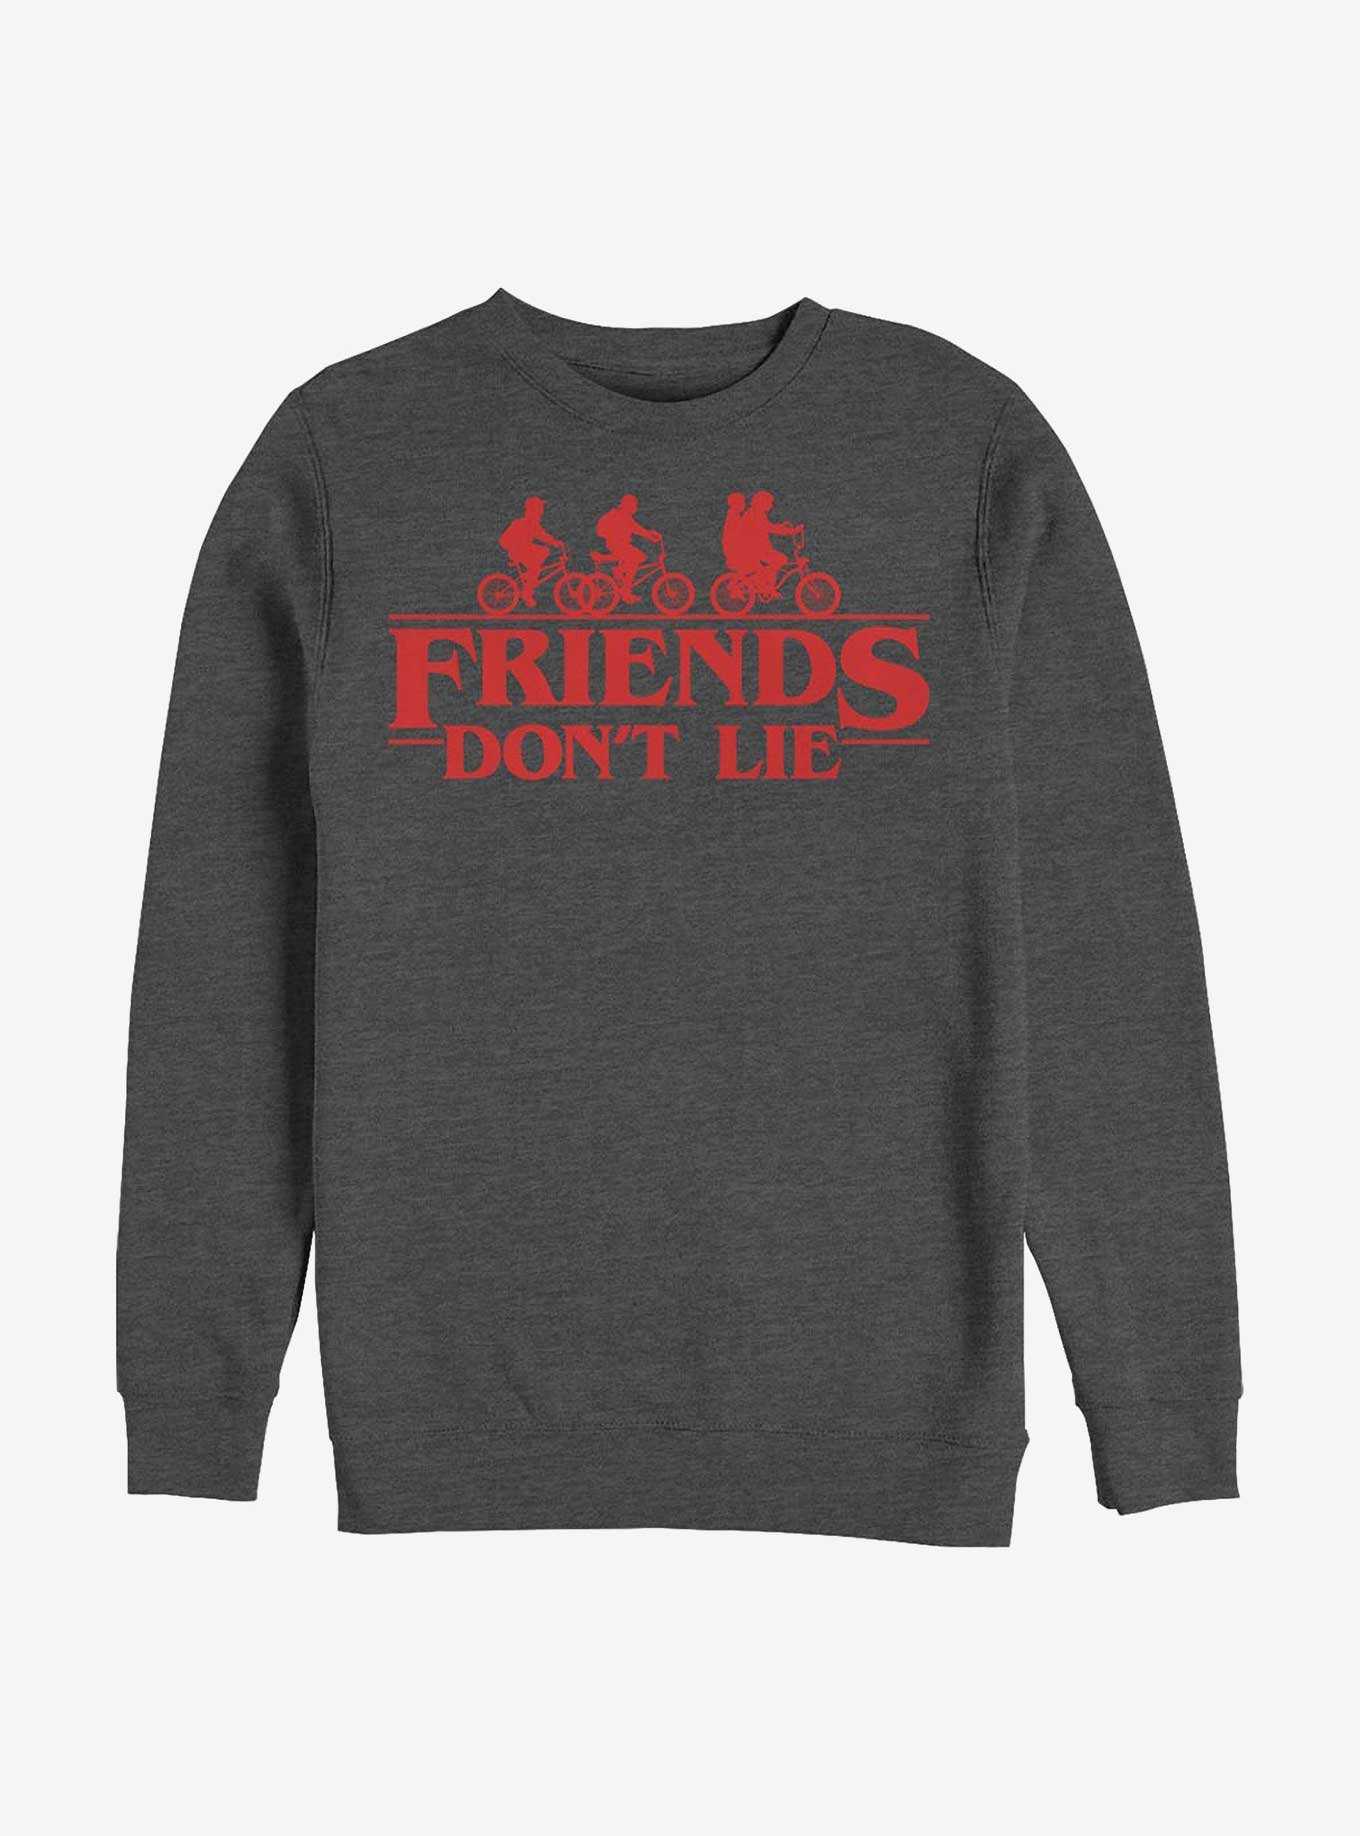 Stranger Things Friends Don't Lie Sweatshirt, , hi-res